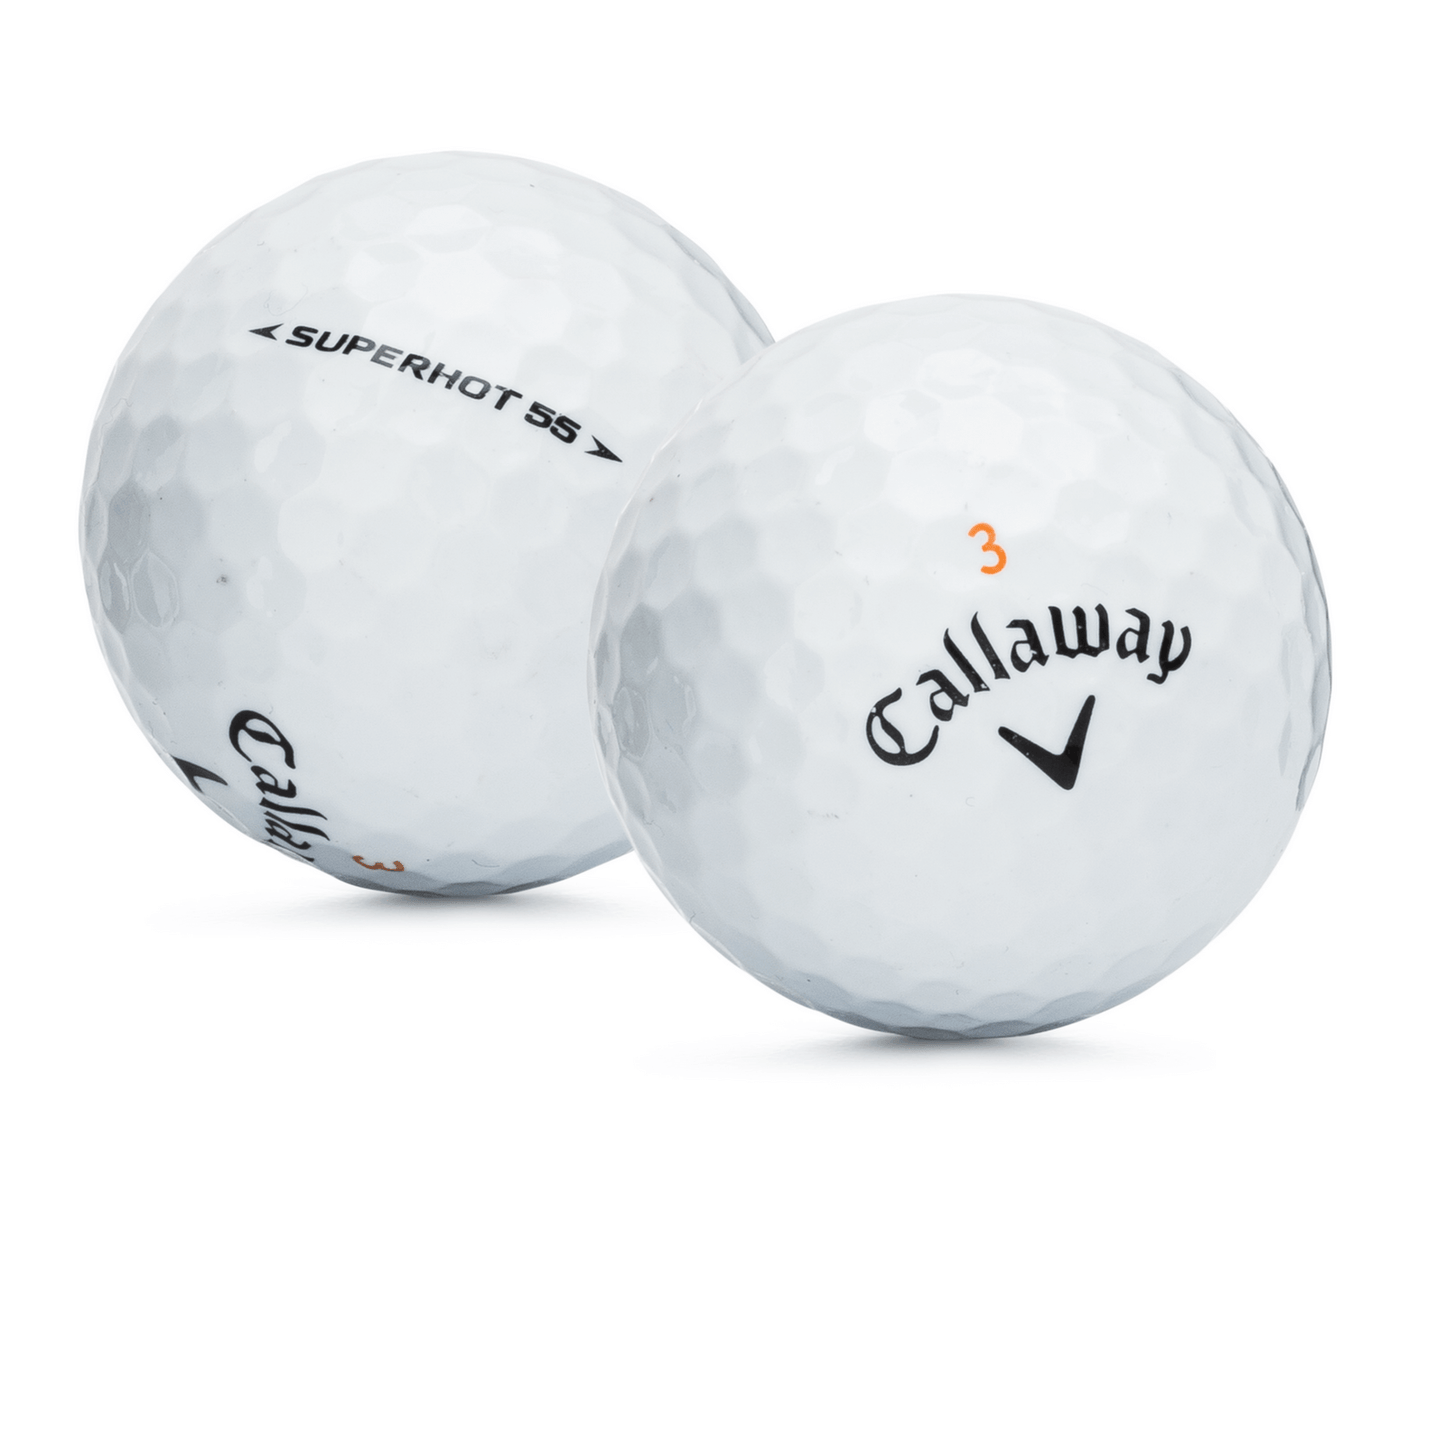 Used Callaway Superhot 55 Golf Balls - 1 Dozen